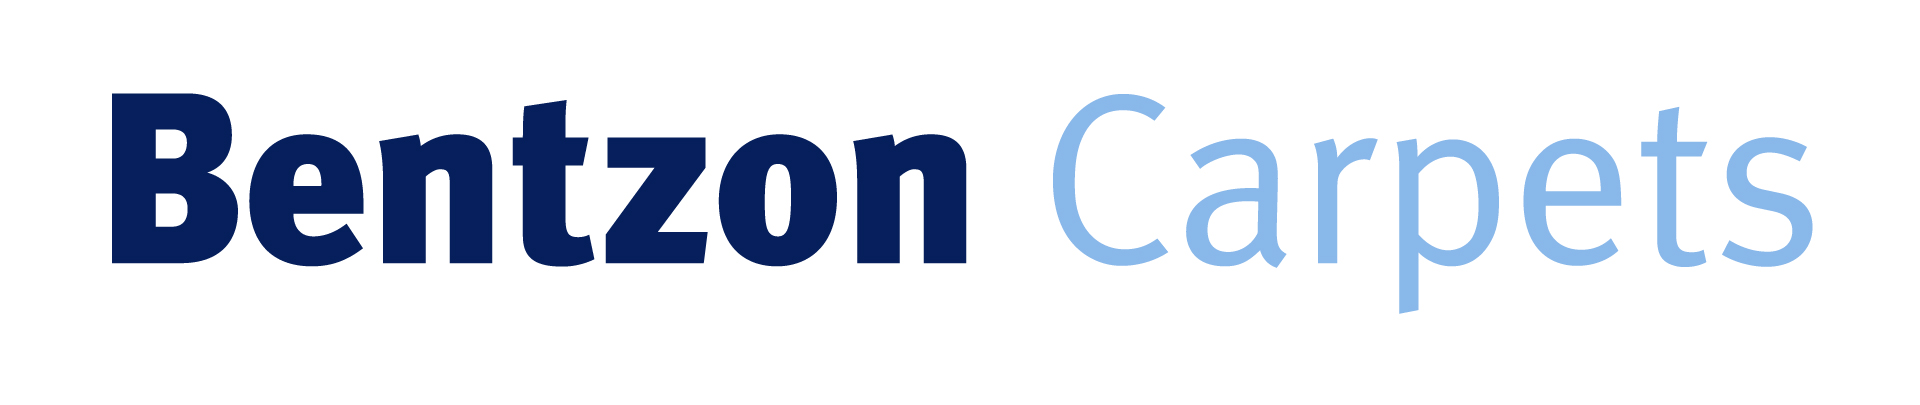 Bentzon carpets logo